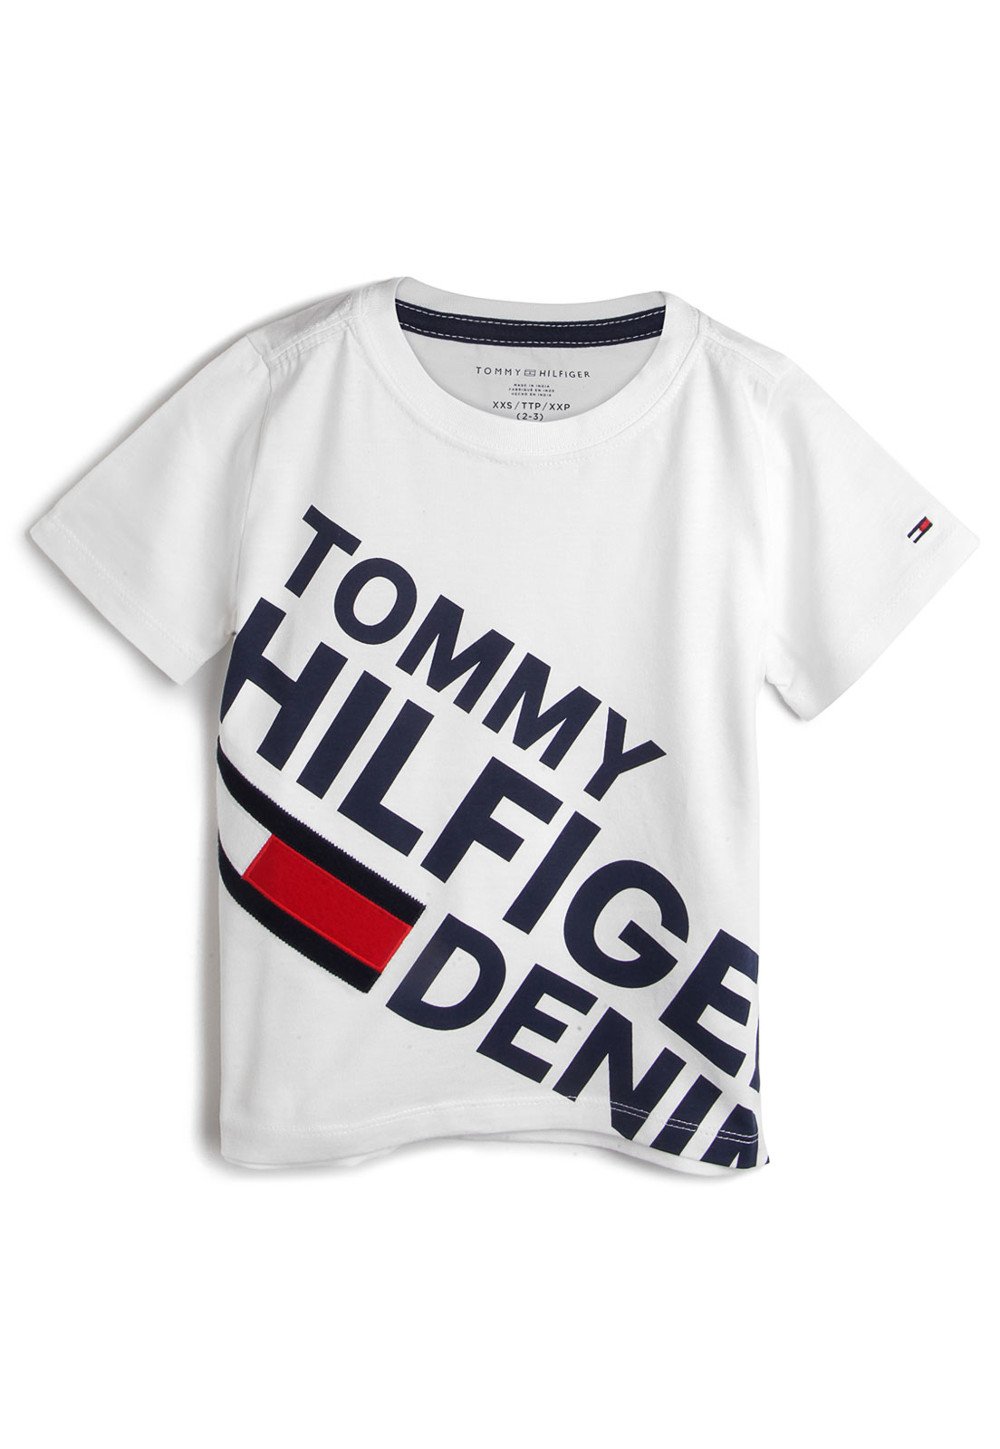 Camiseta Tommy Hilfiger Infantil Feminina Rosa